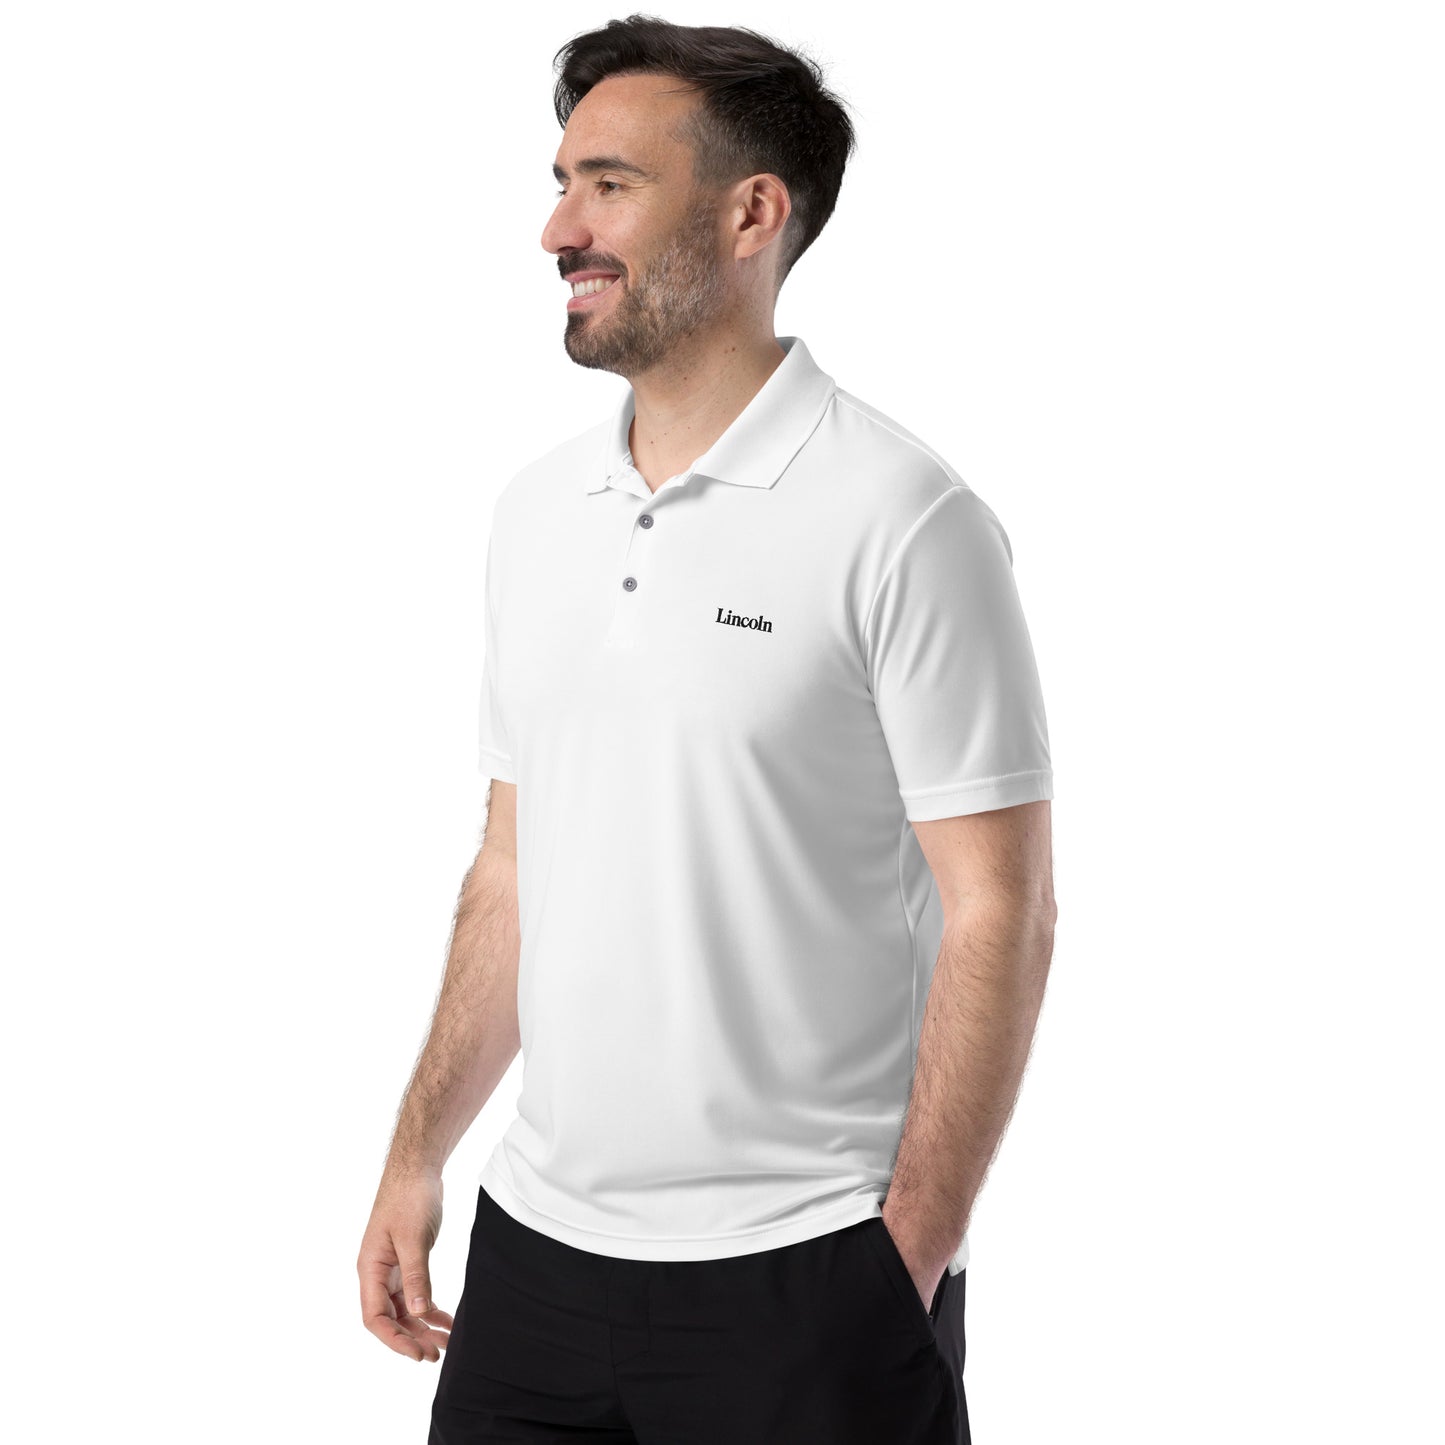 Men's Adidas Performance Polo Shirt